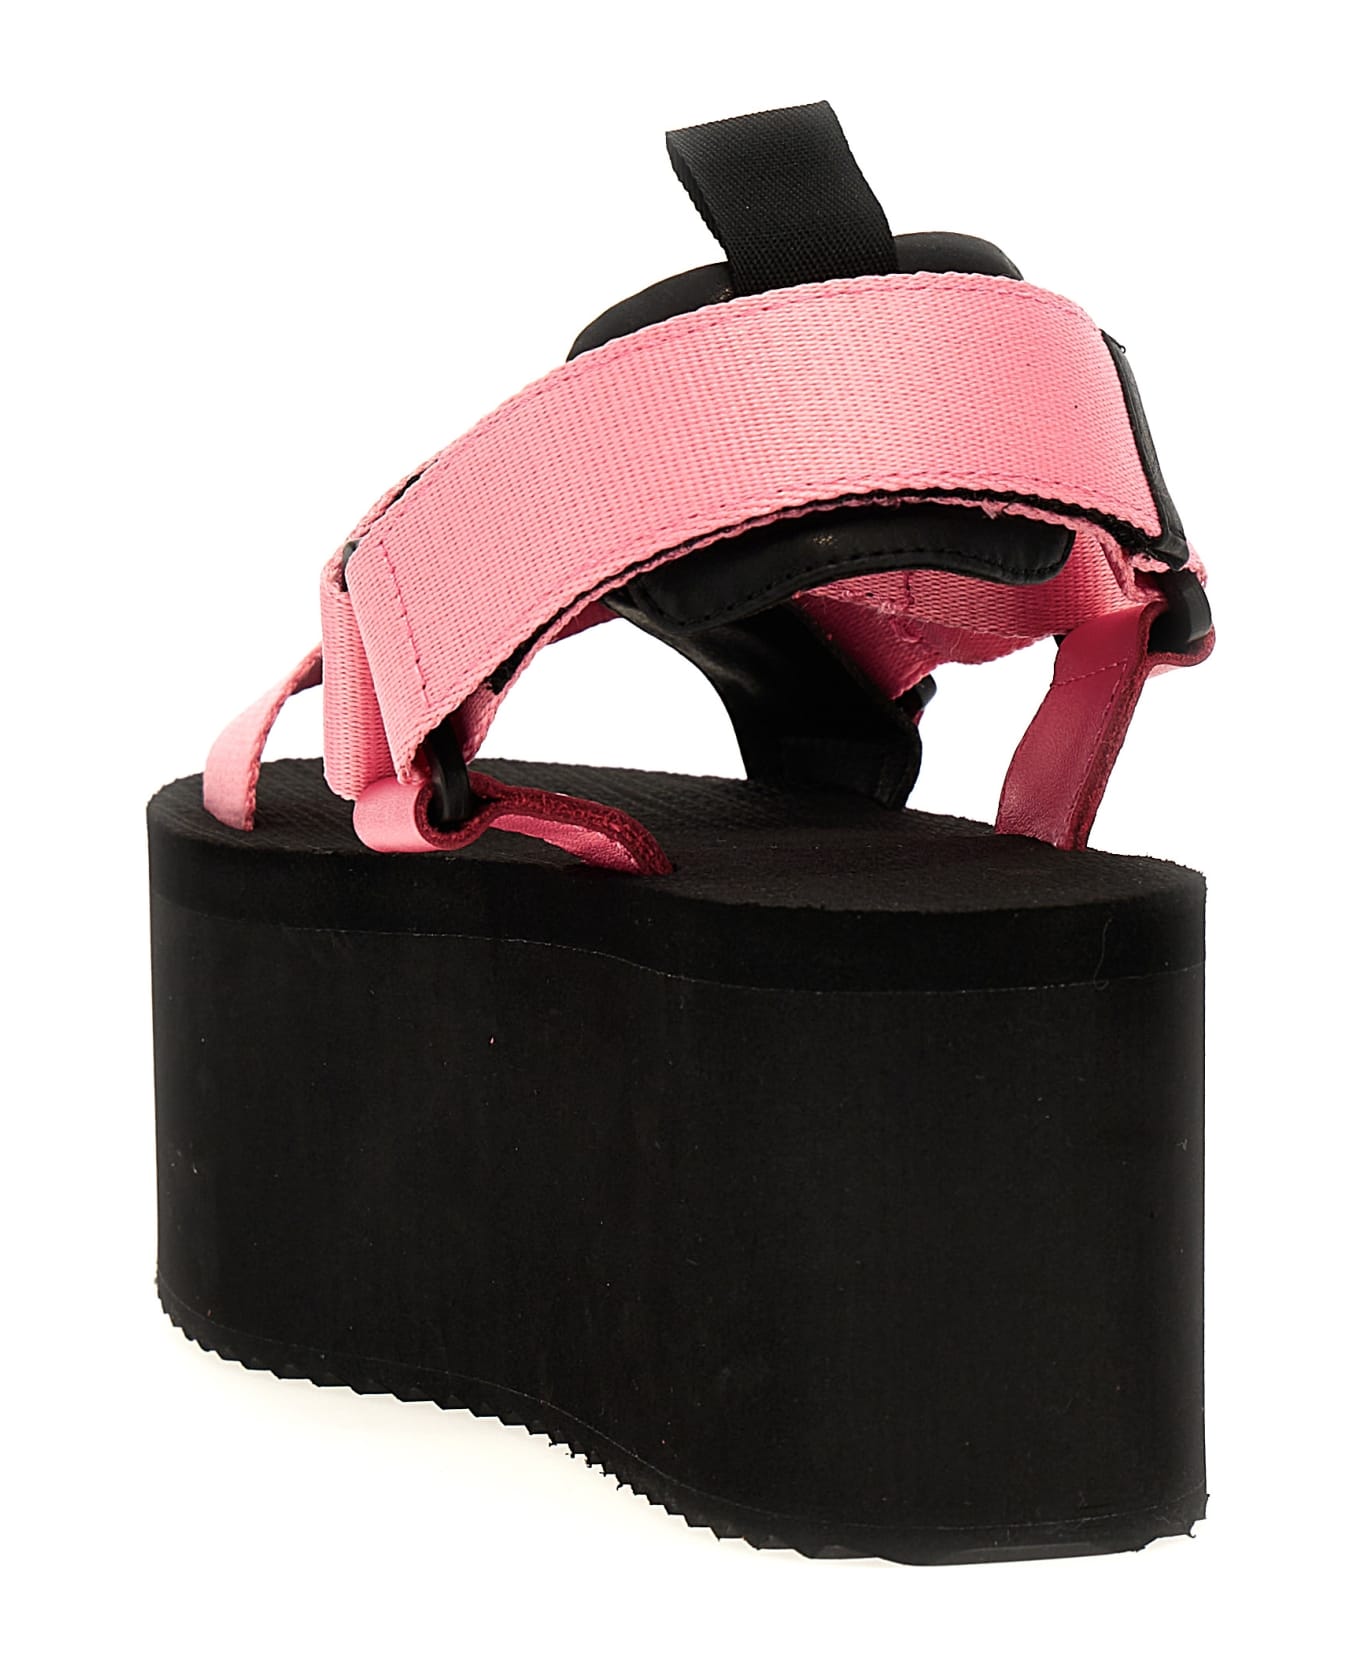 Moschino Logo Sandals - Pink